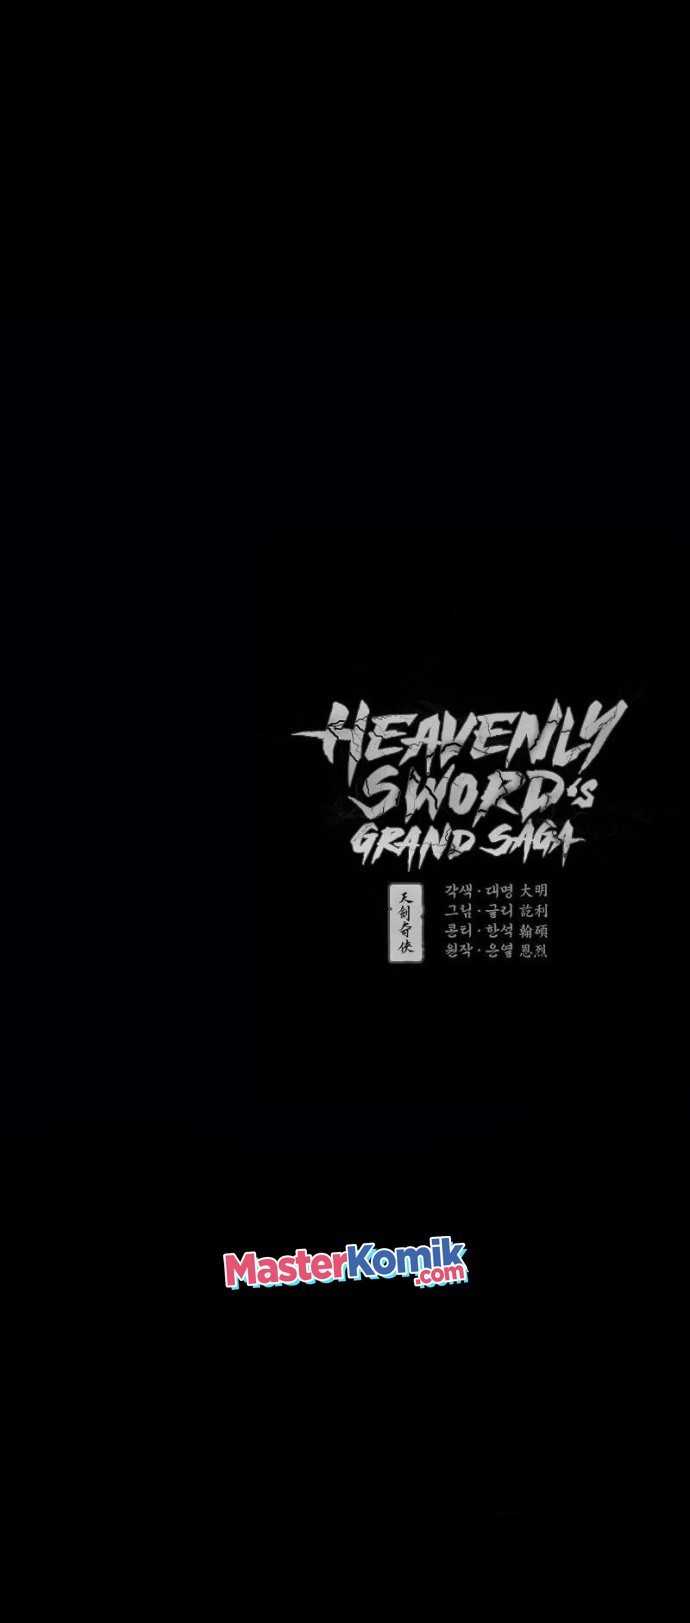 Heavenly Sword’s Grand Saga Chapter 21